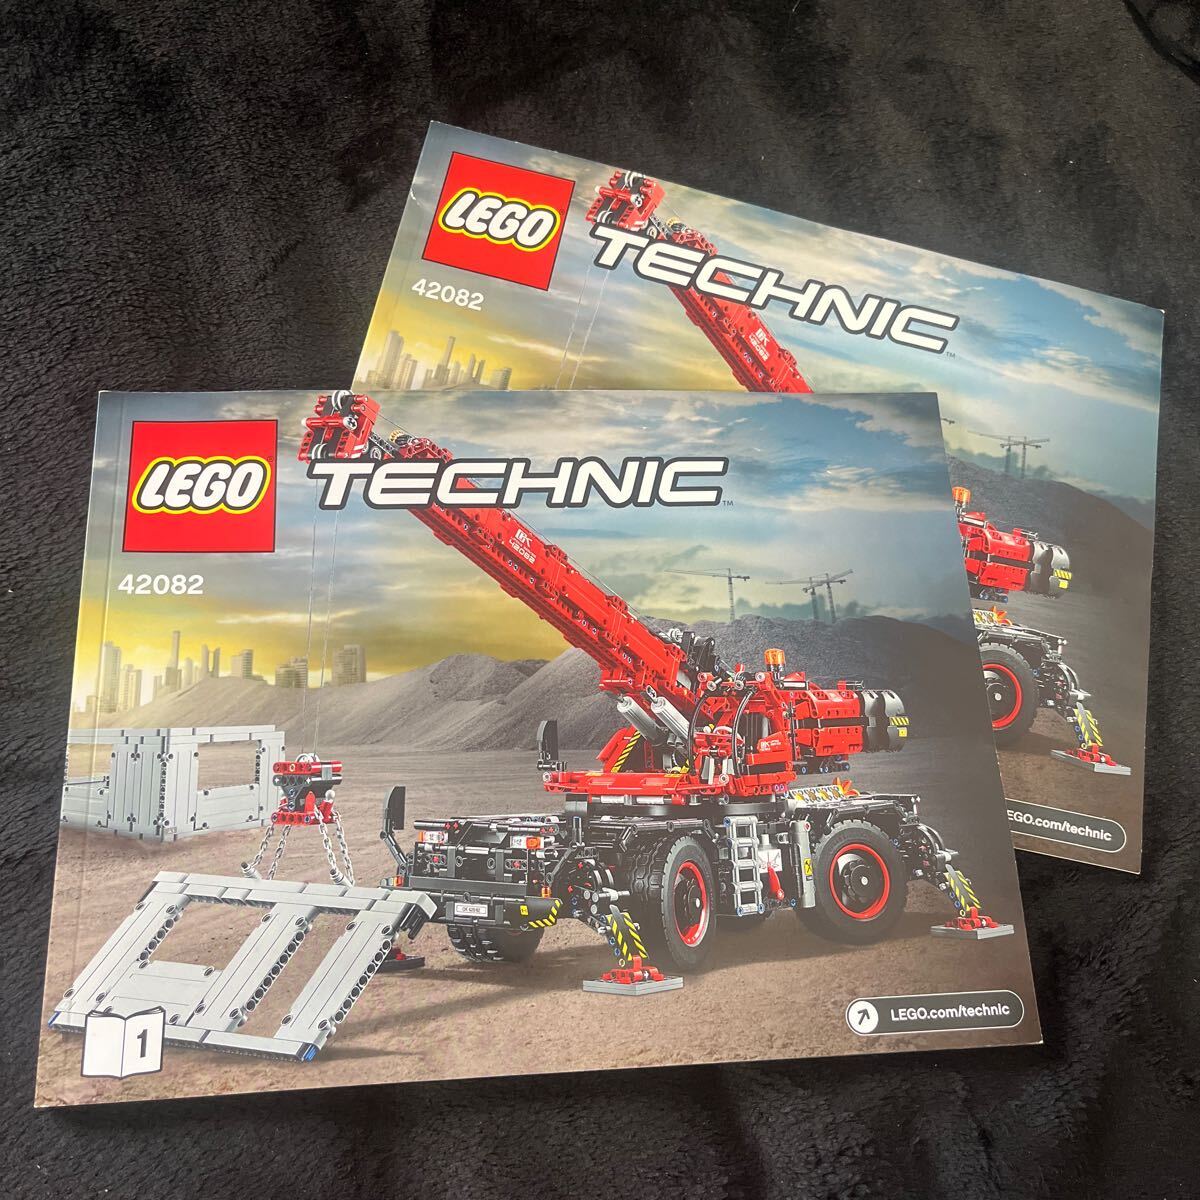  Lego Technic 42082 all ground shape correspondence type crane box less LEGO TECHNIC